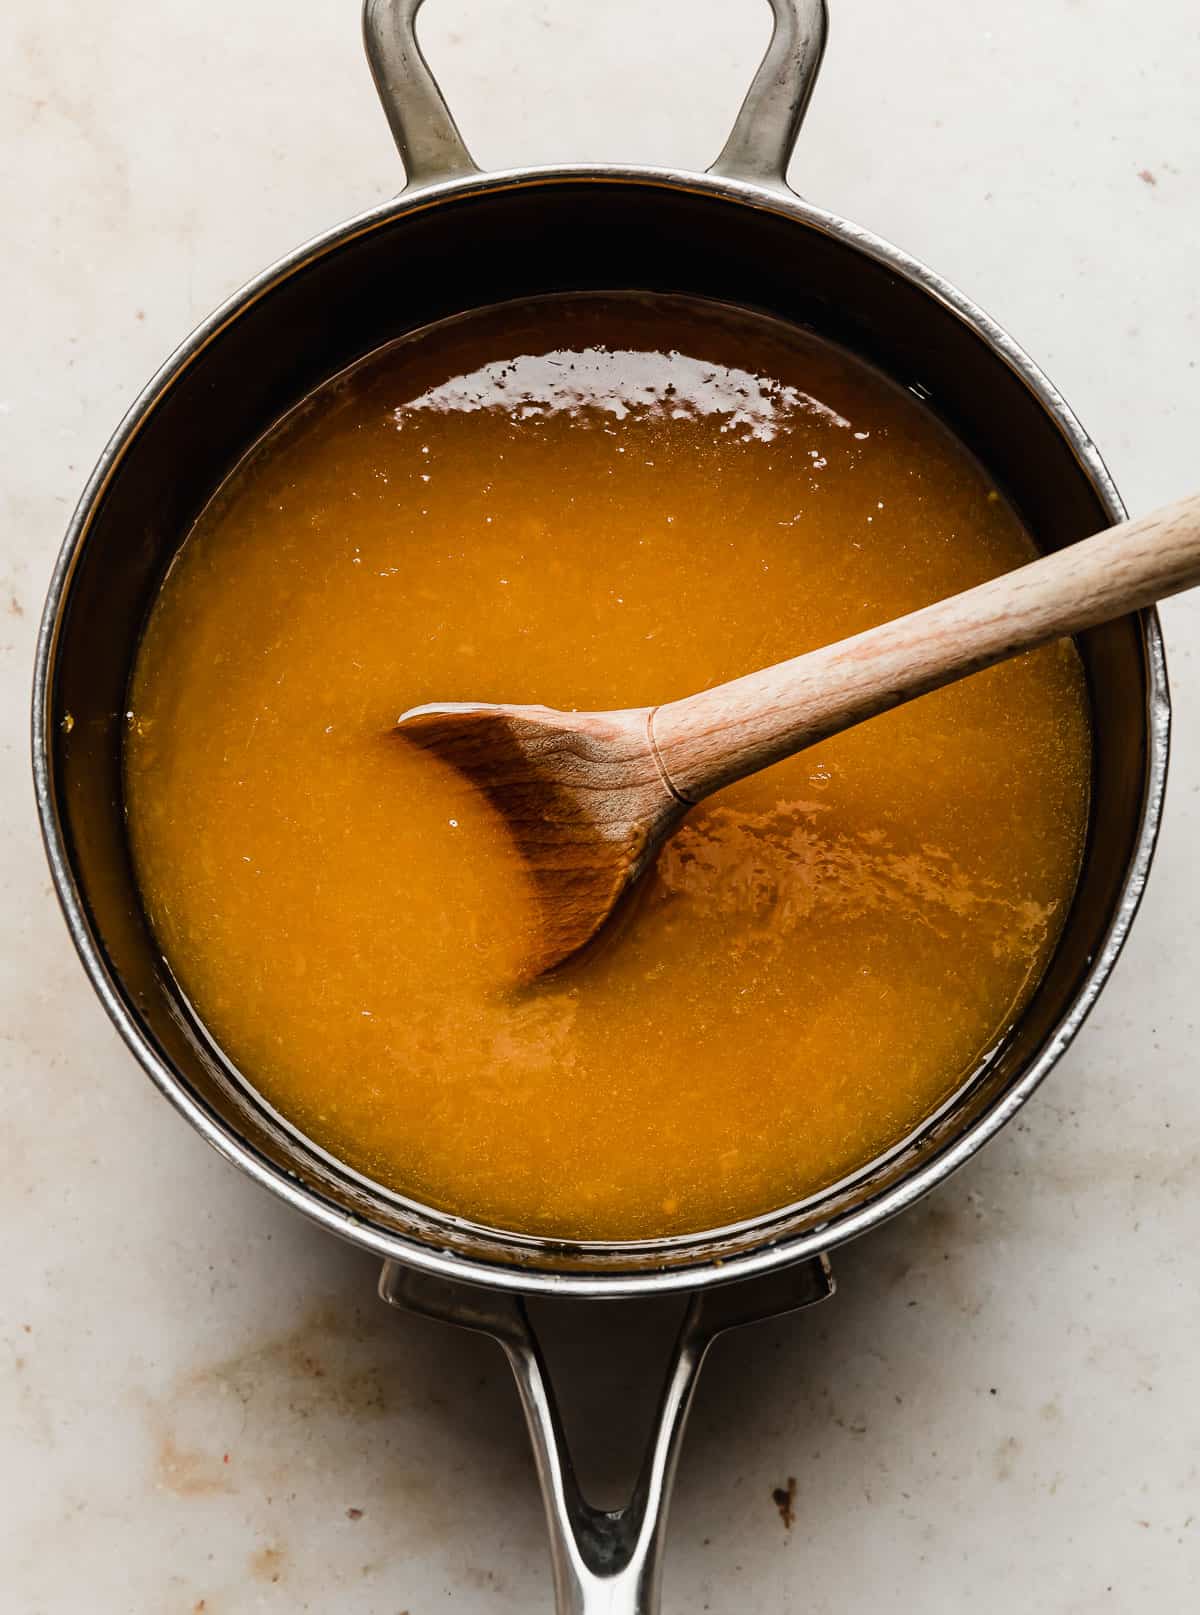 A deep orange colored orange juice candied yams sauce in a saucepan.